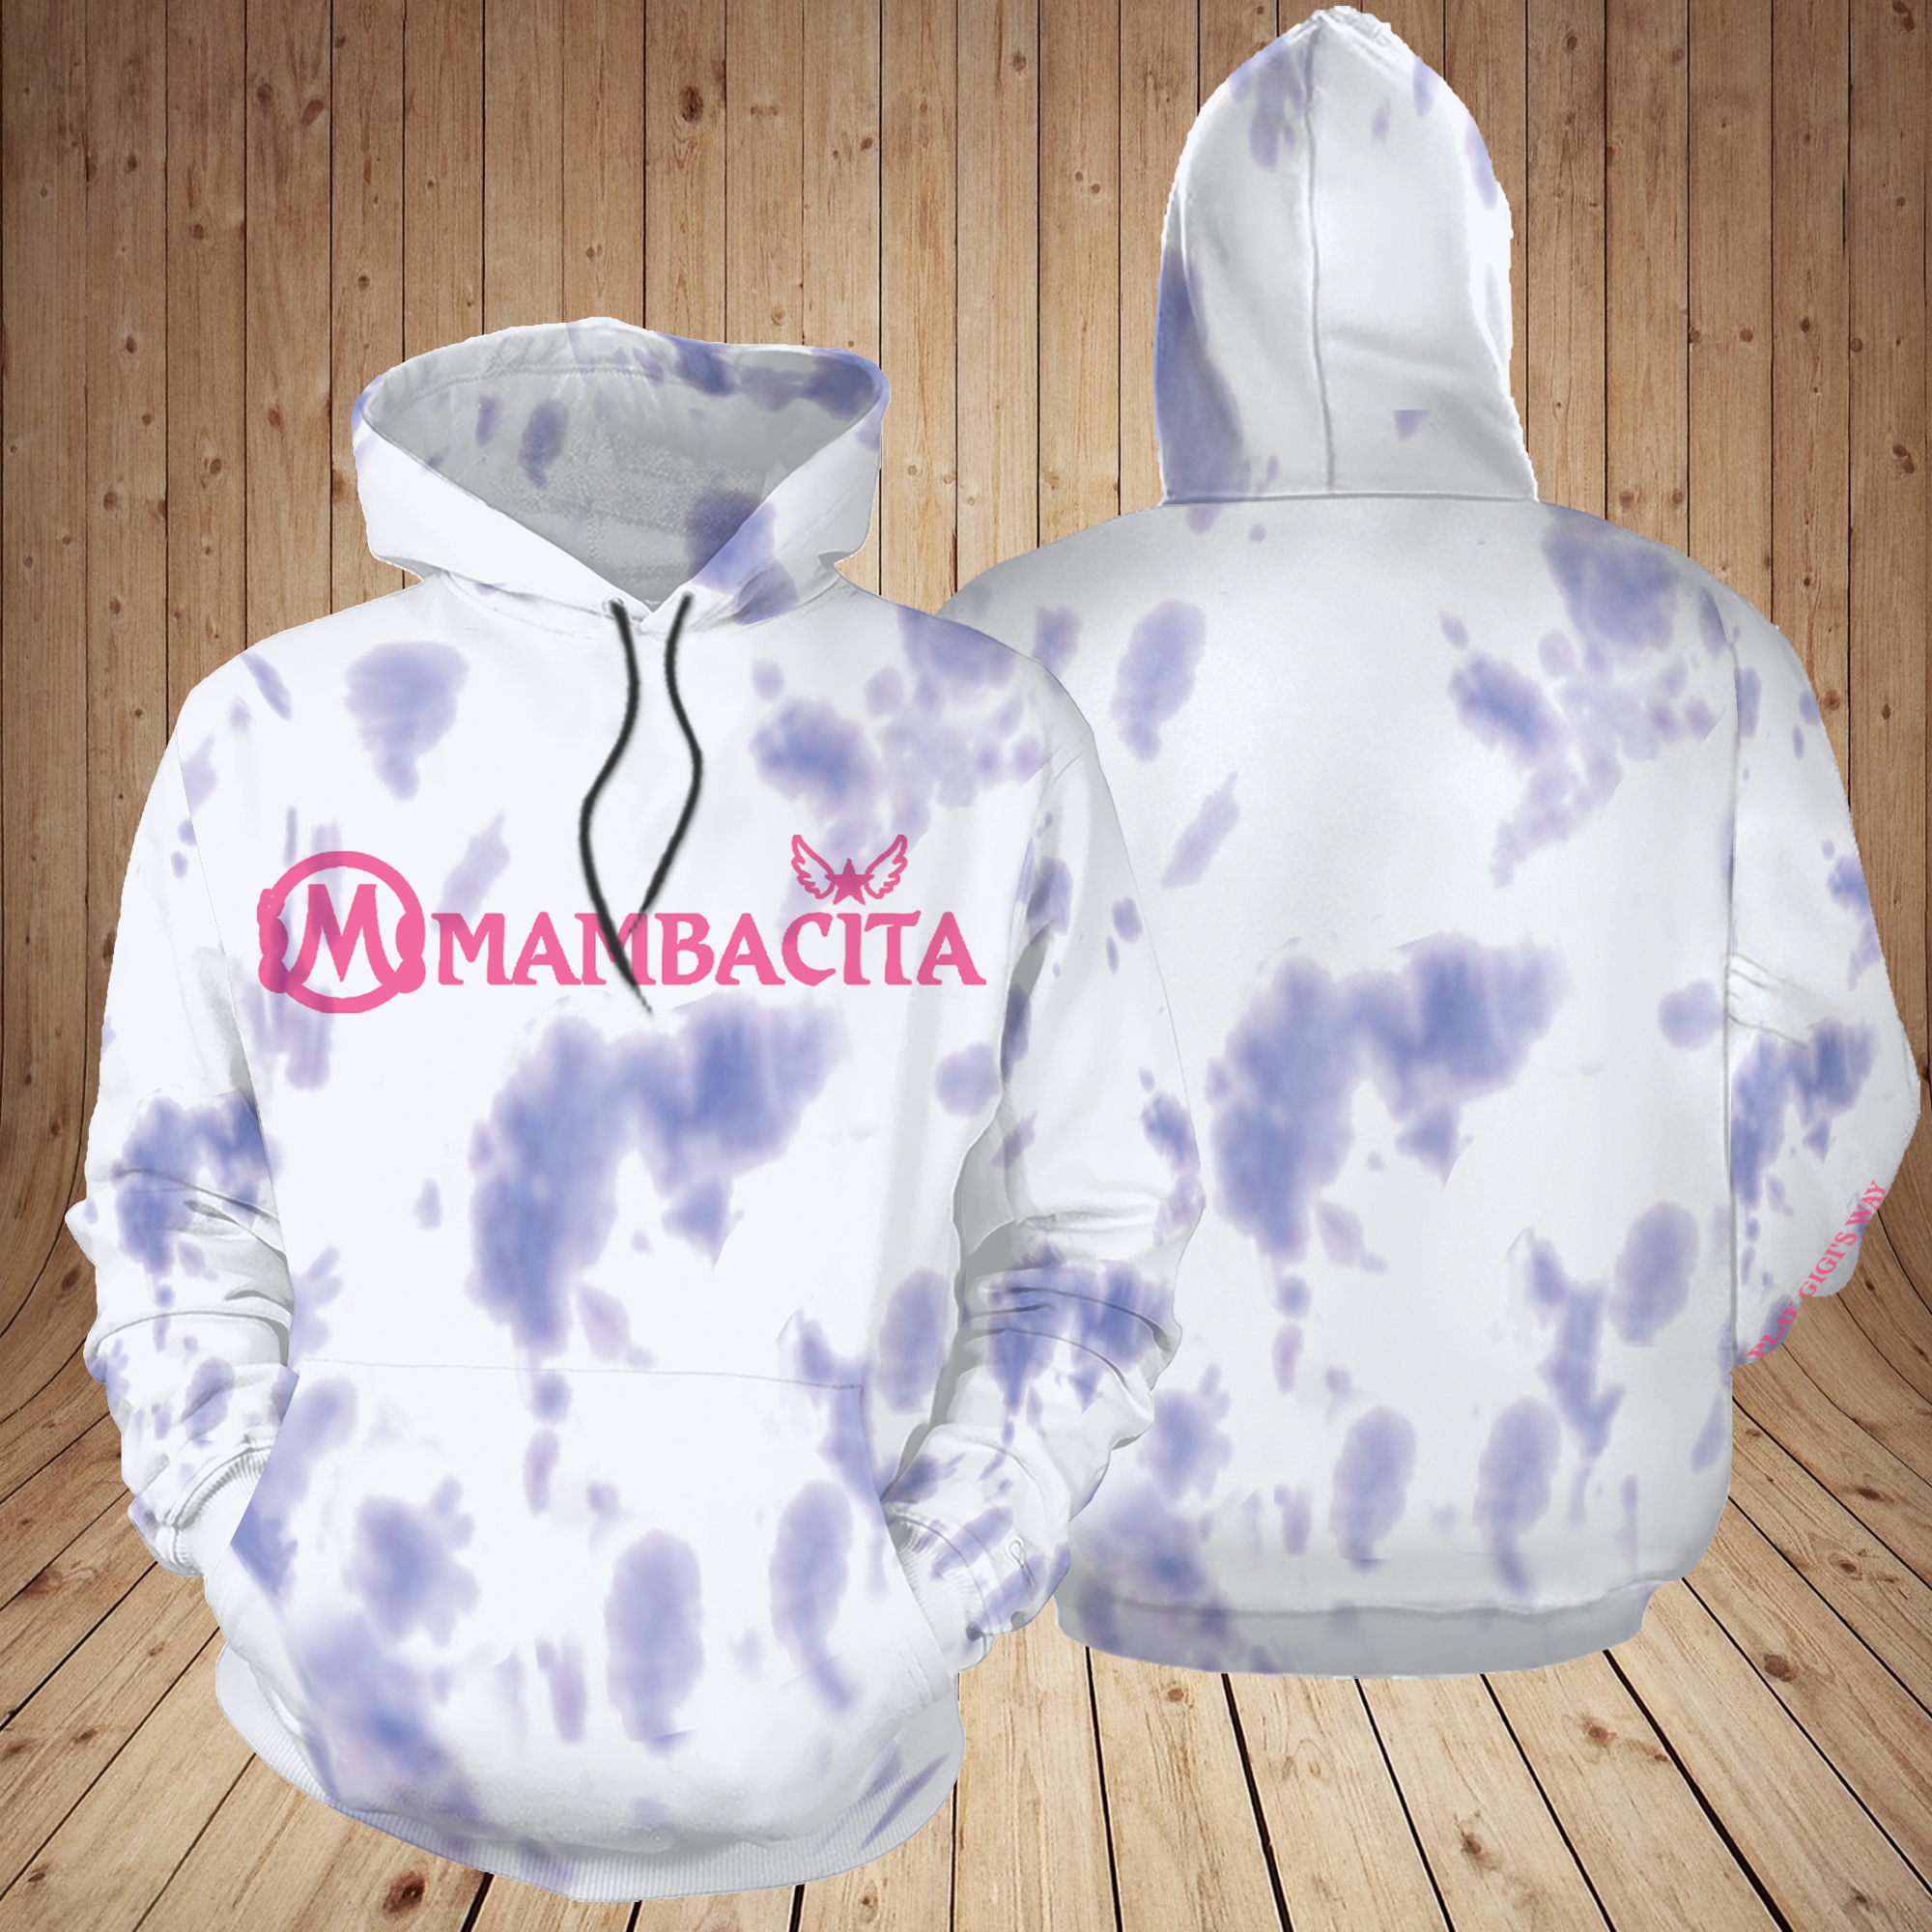 Mambacita all over printed hoodie - Saleoff 250521